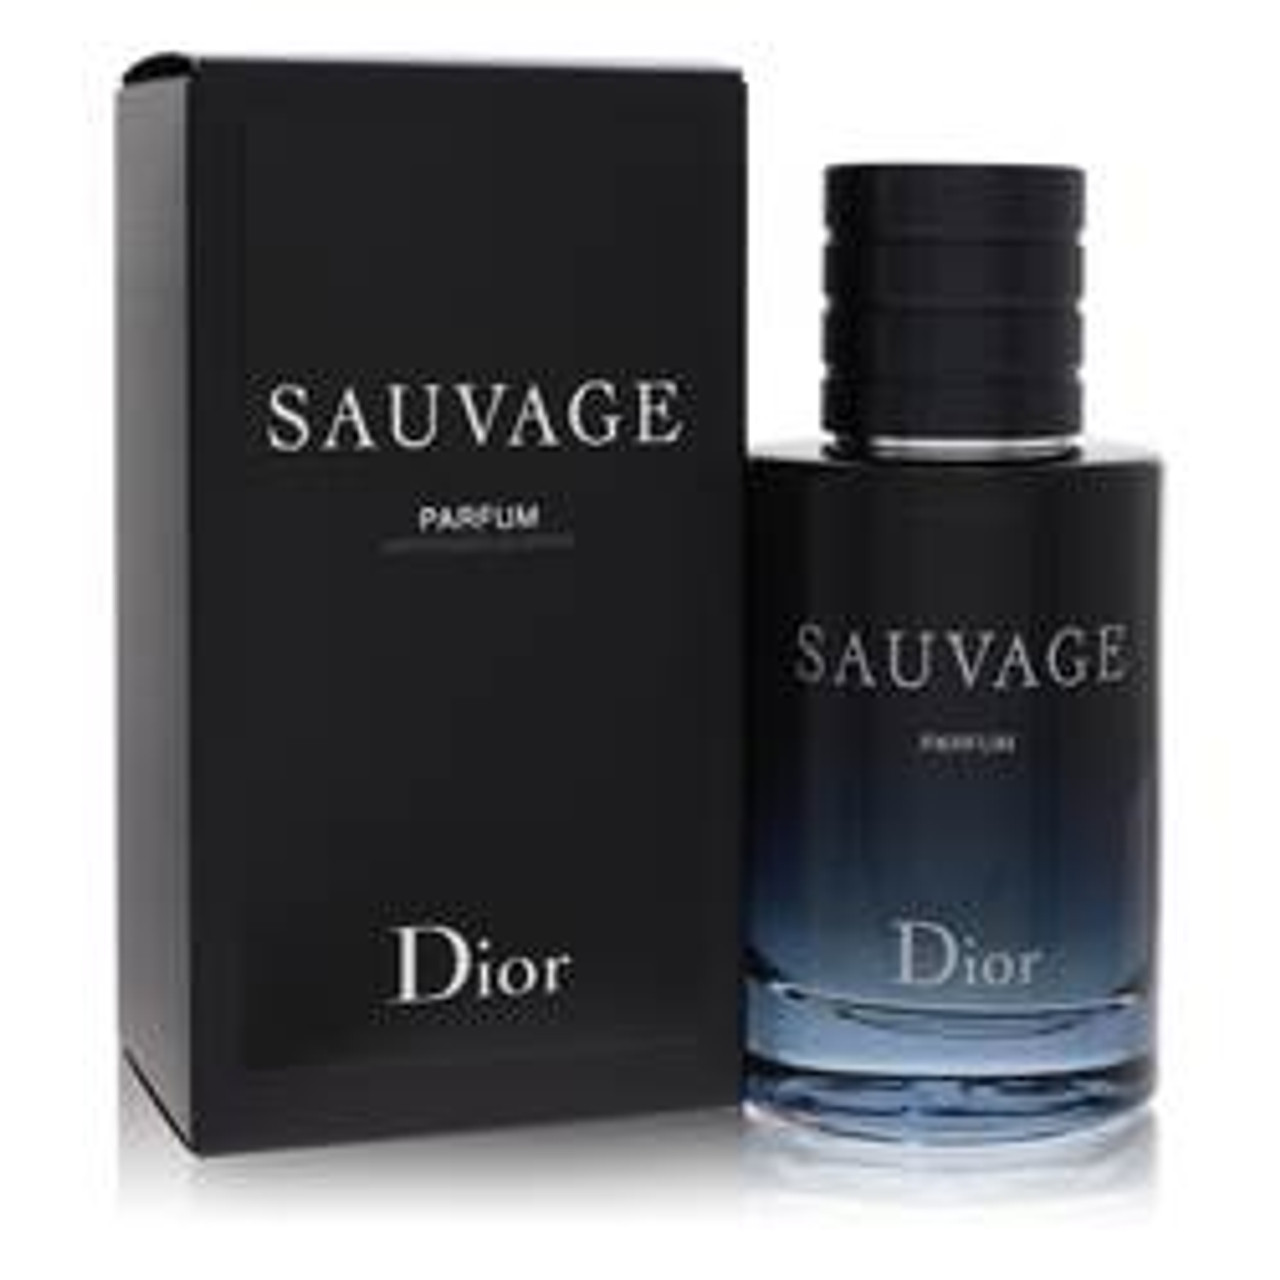 Sauvage Cologne By Christian Dior Parfum Spray 2 oz for Men - *Pre-Order